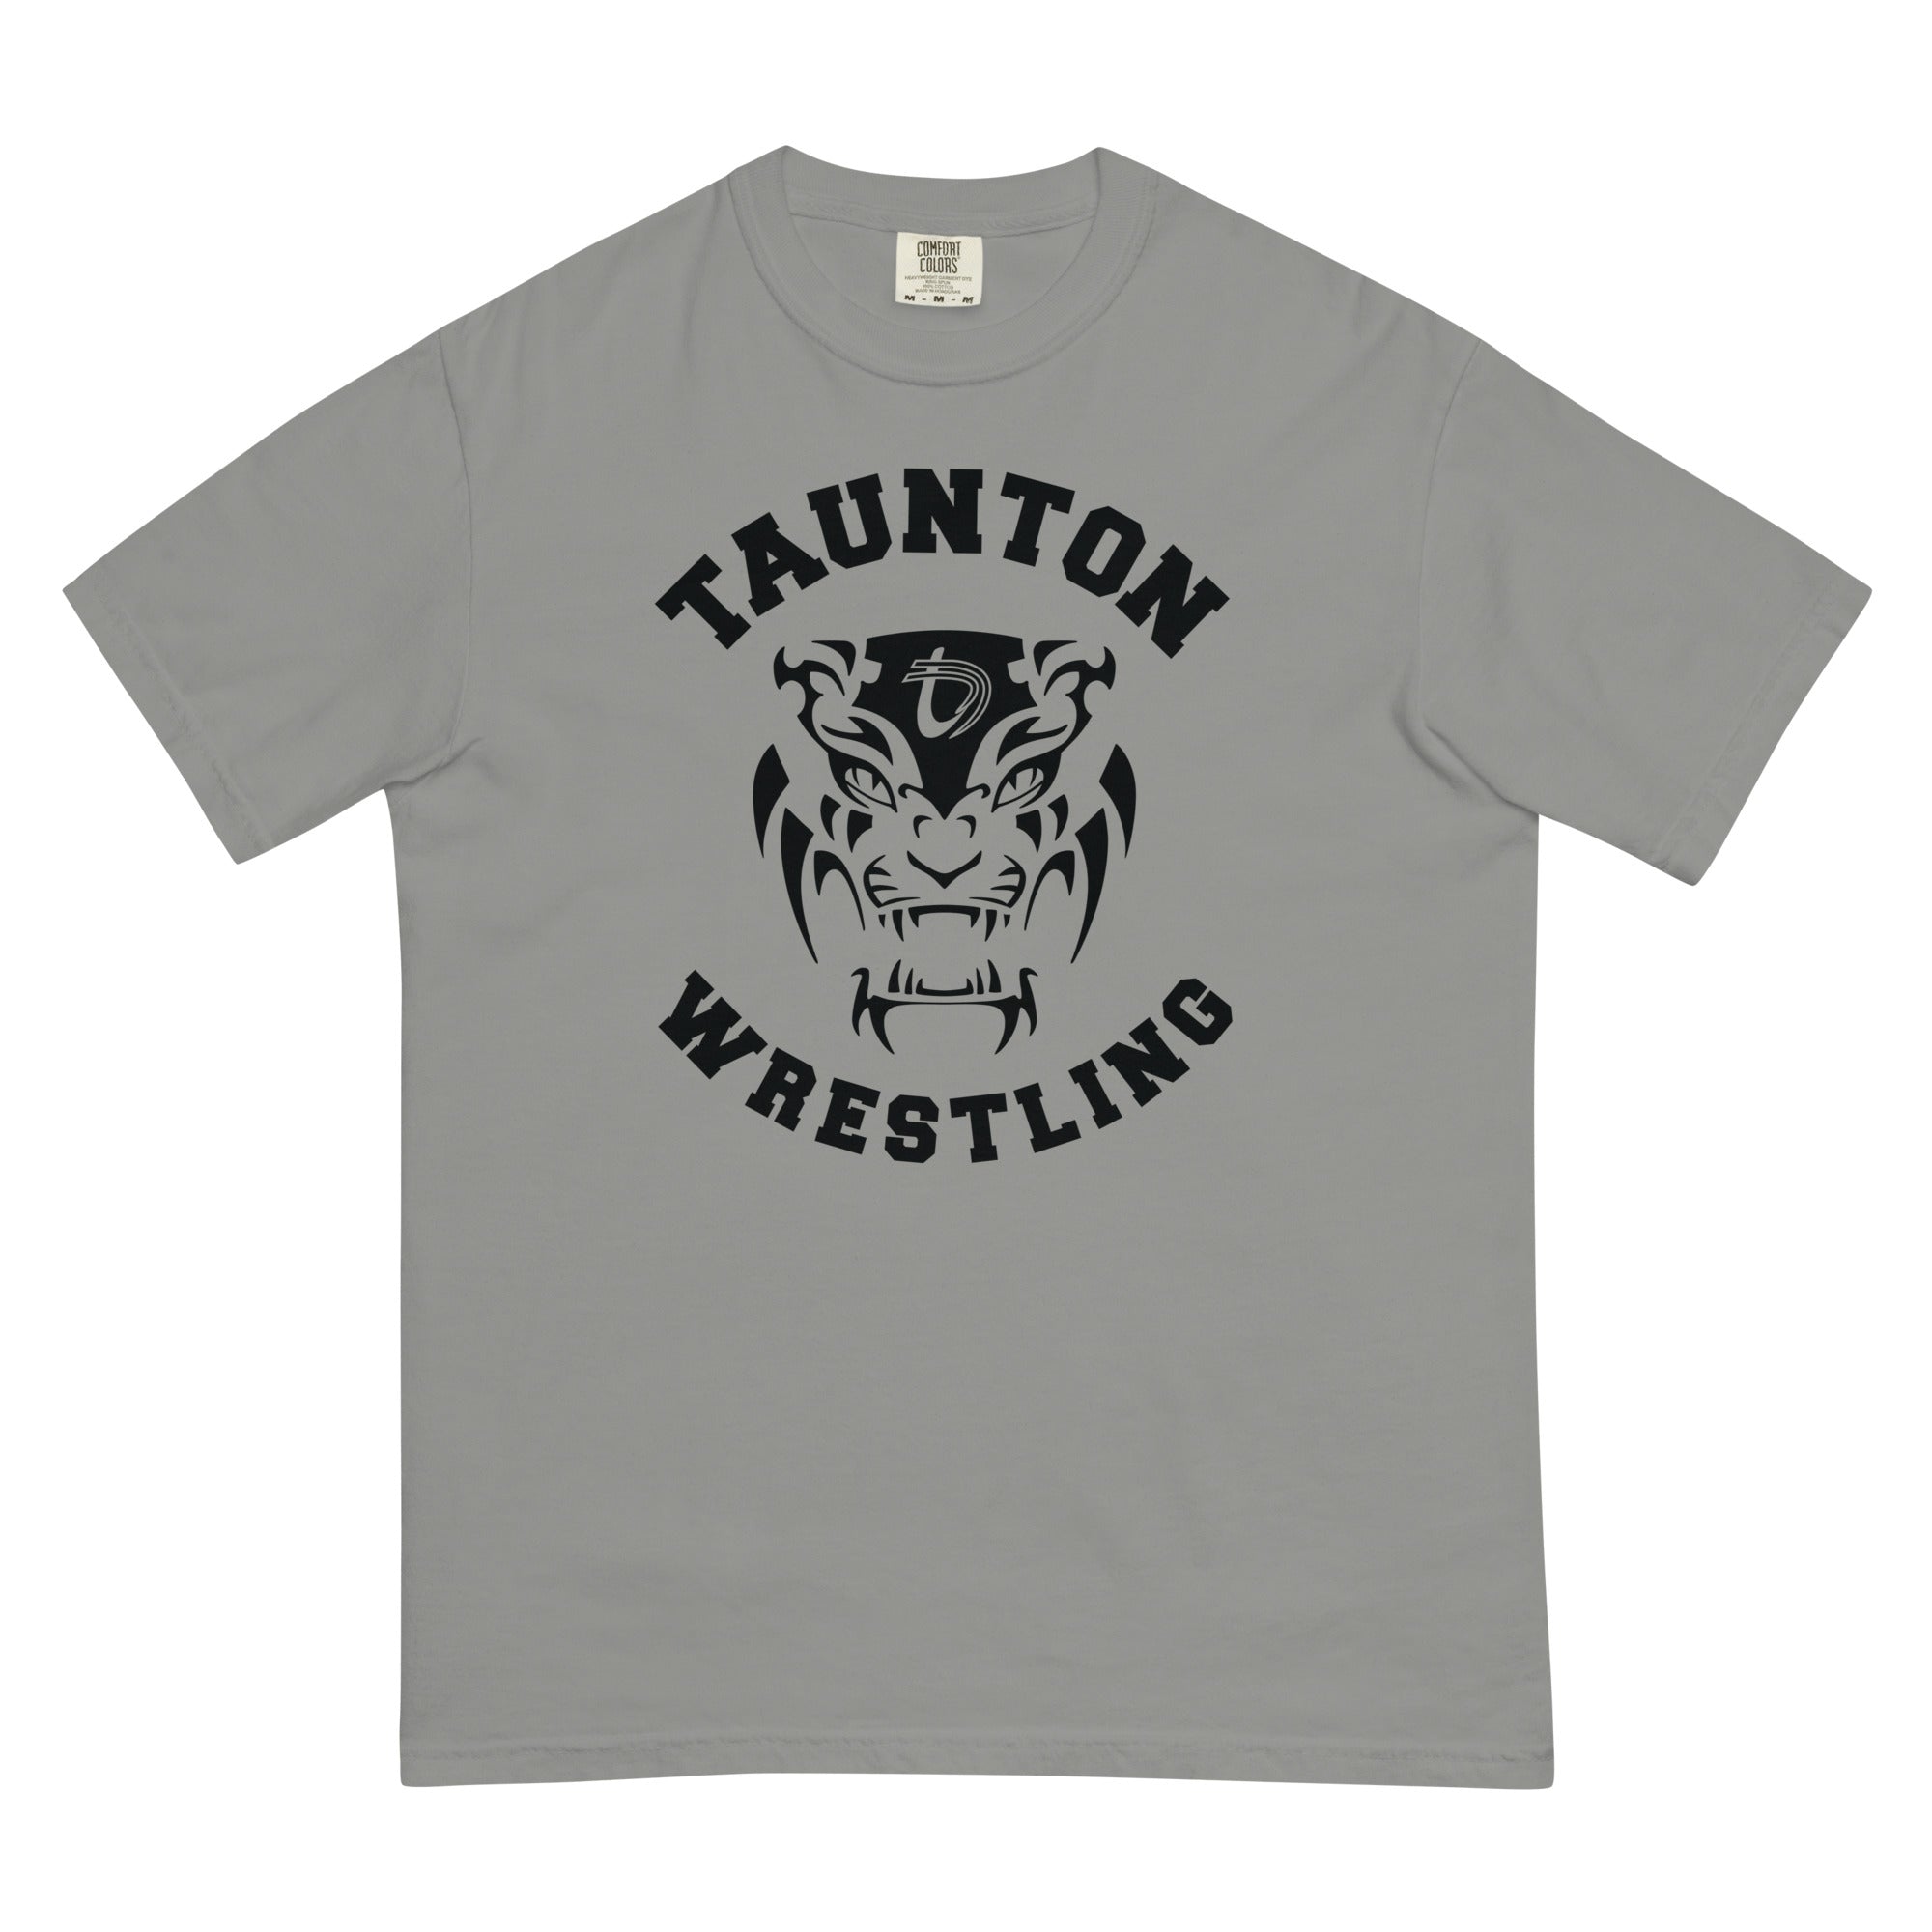 Taunton Wrestling Men’s garment-dyed heavyweight t-shirt